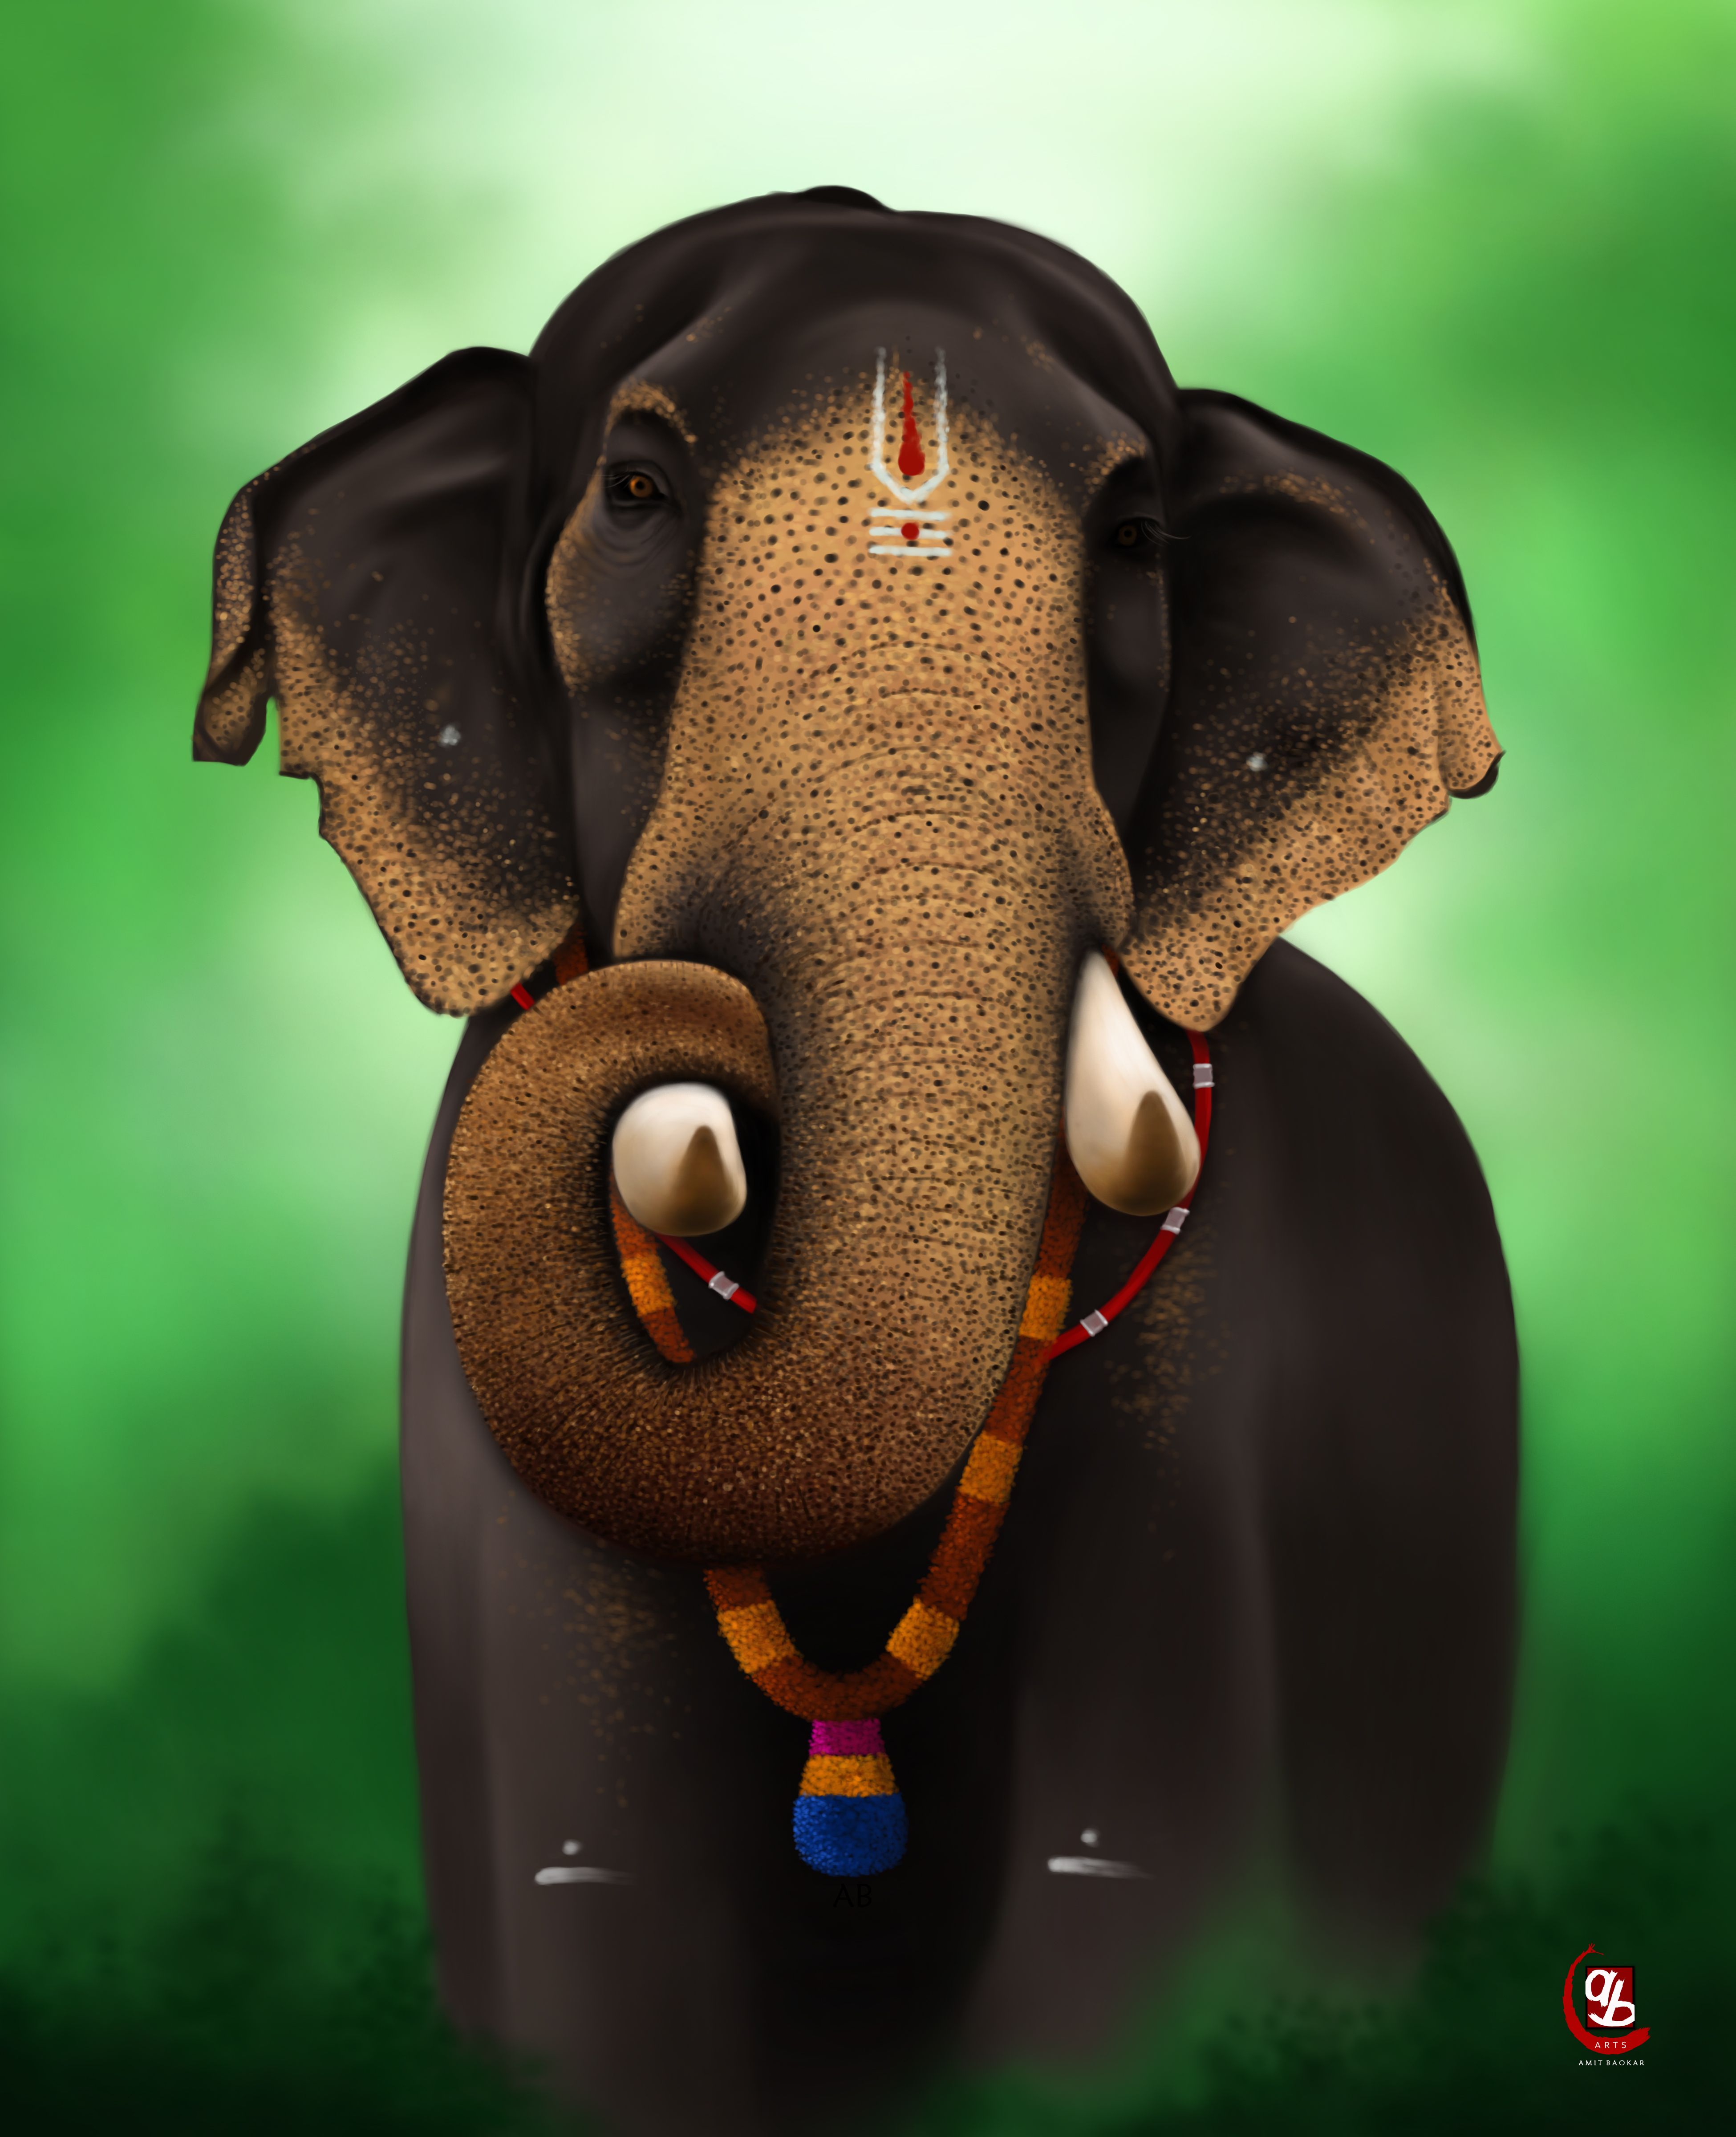 Vedic art ideas. vedic art, war elephant, myanmar art